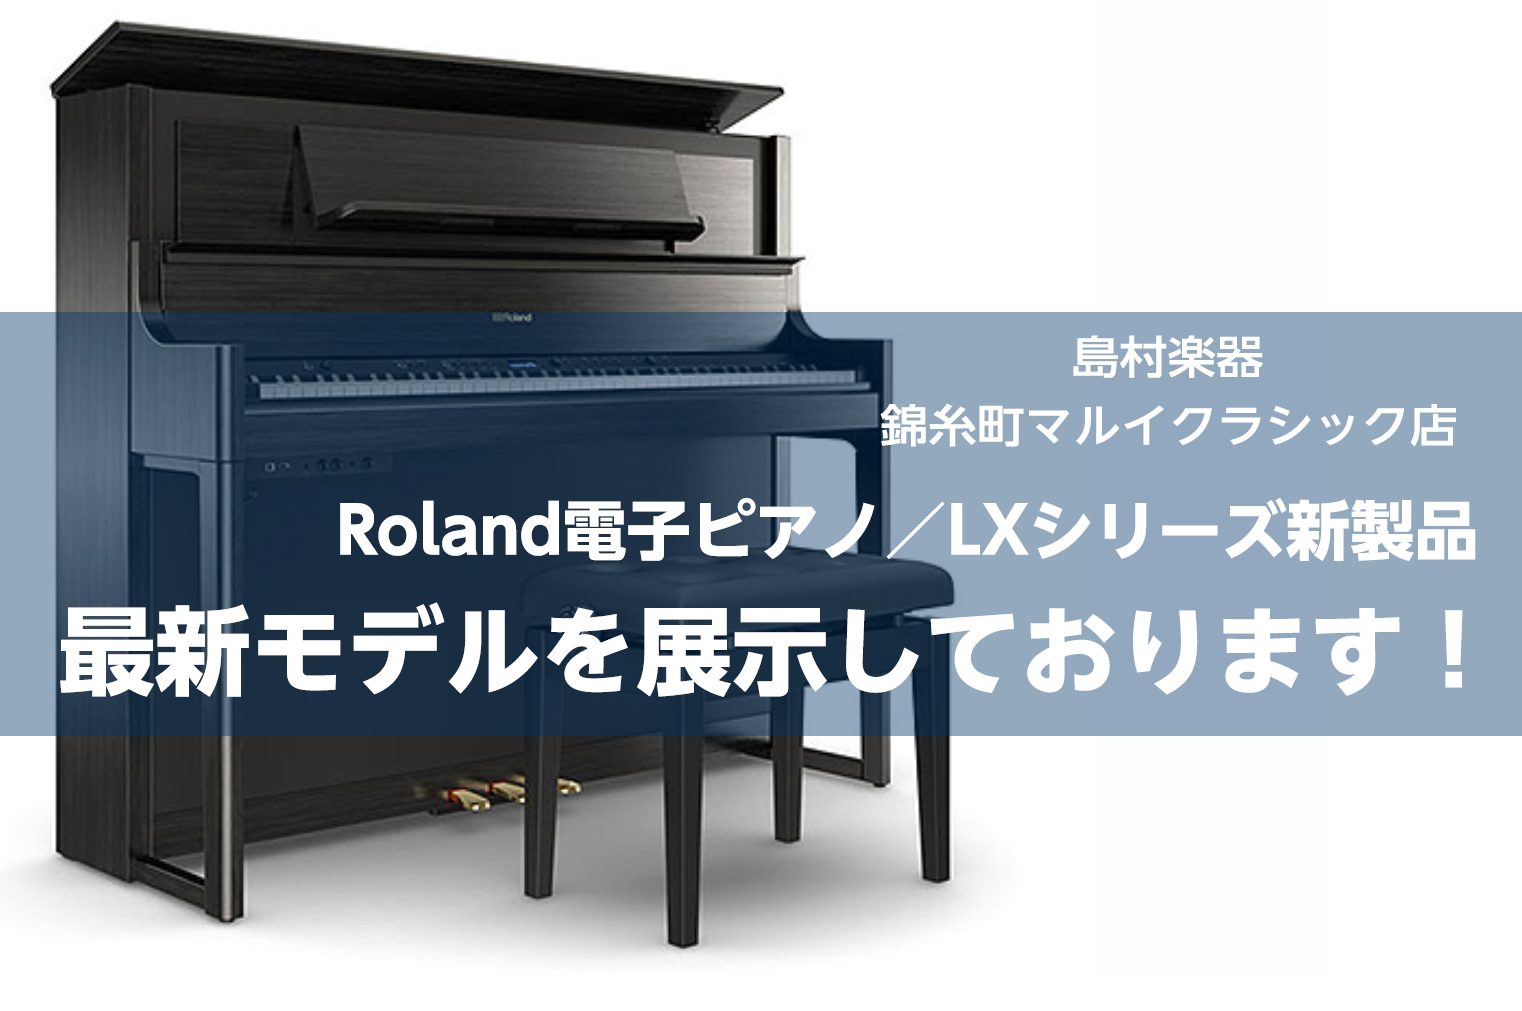 CONTENTS新しいLXシリーズのポイント！島村楽器限定モデル！LX5GP・LX6GP・LX9GPならではの特徴新LXシリーズの製品仕様お問い合わせ毎月開催のキャンペーンでいつものお買い物をもっとお得に♪新しいLXシリーズのポイント！ 1.ピアノの基本性能すべてが進化。最新技術「ピアノ・リアリティ […]